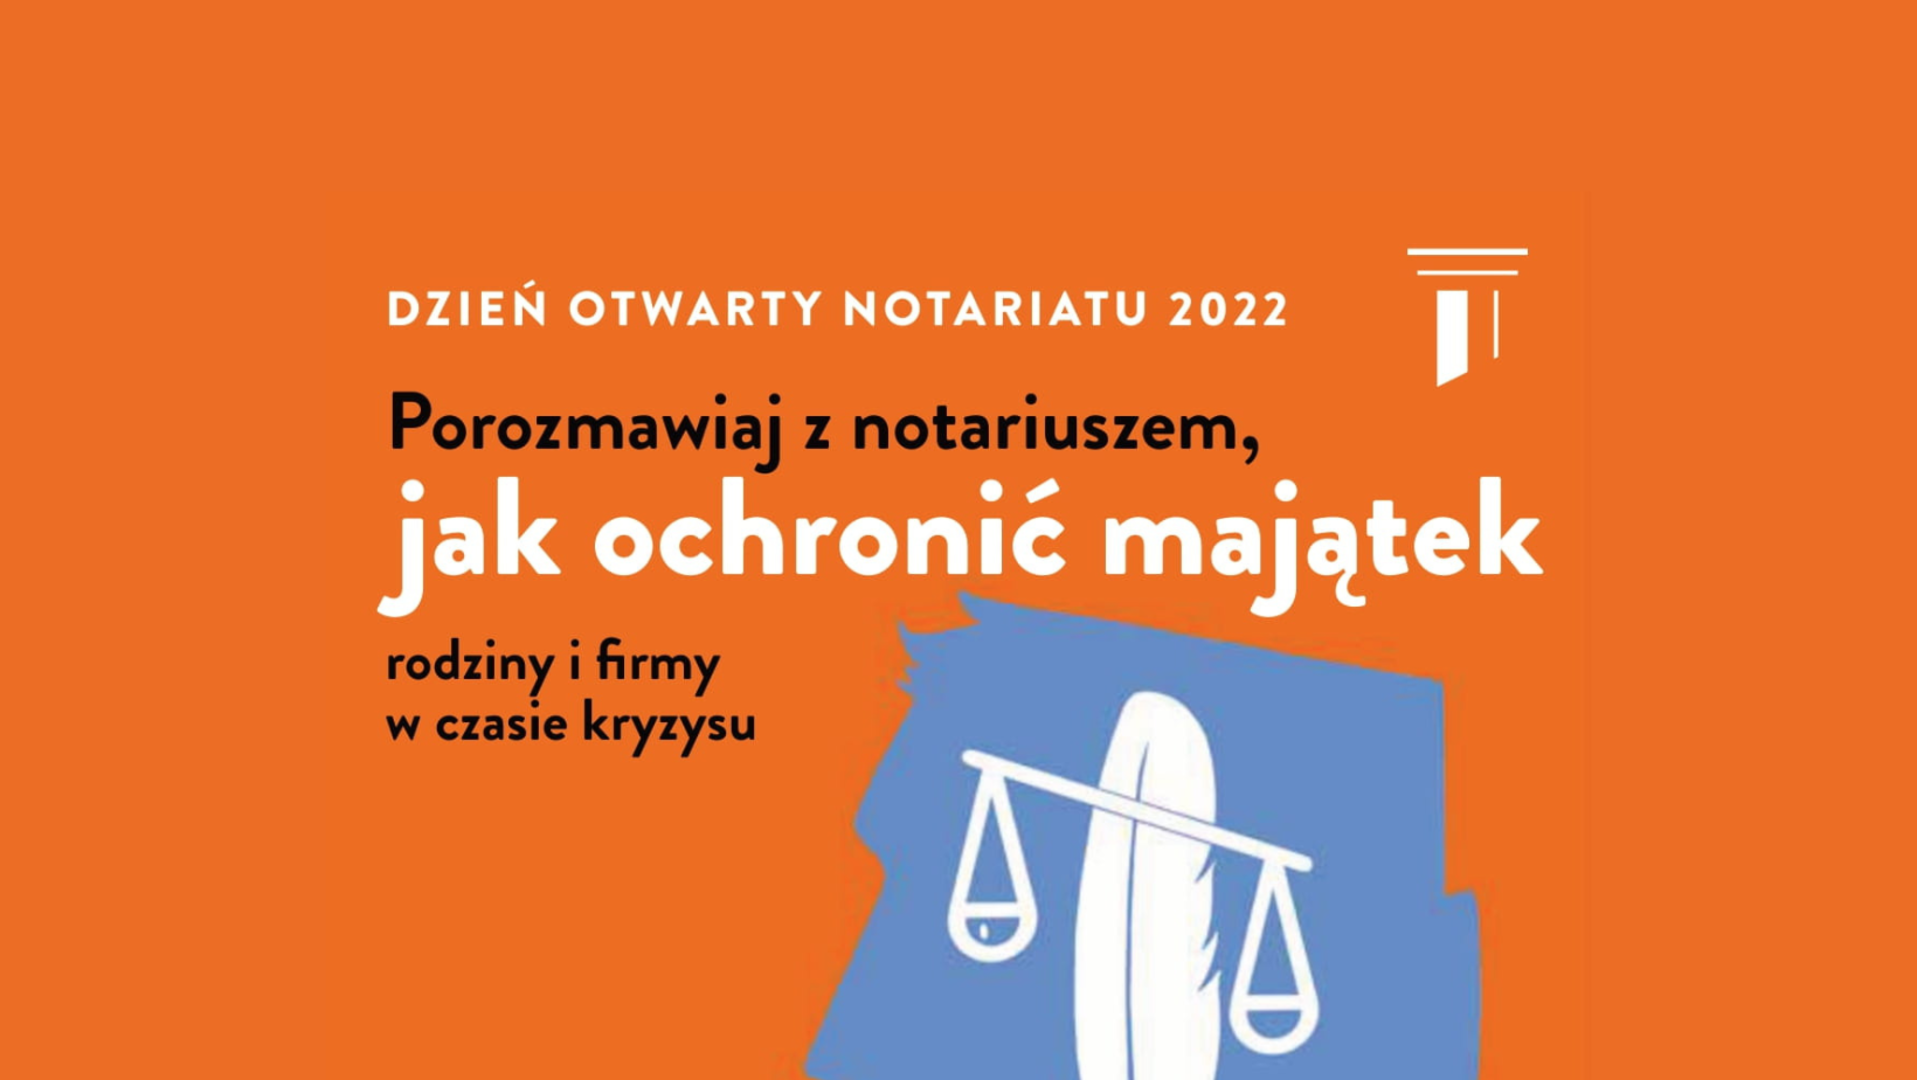 Dzień otwarty notariatu